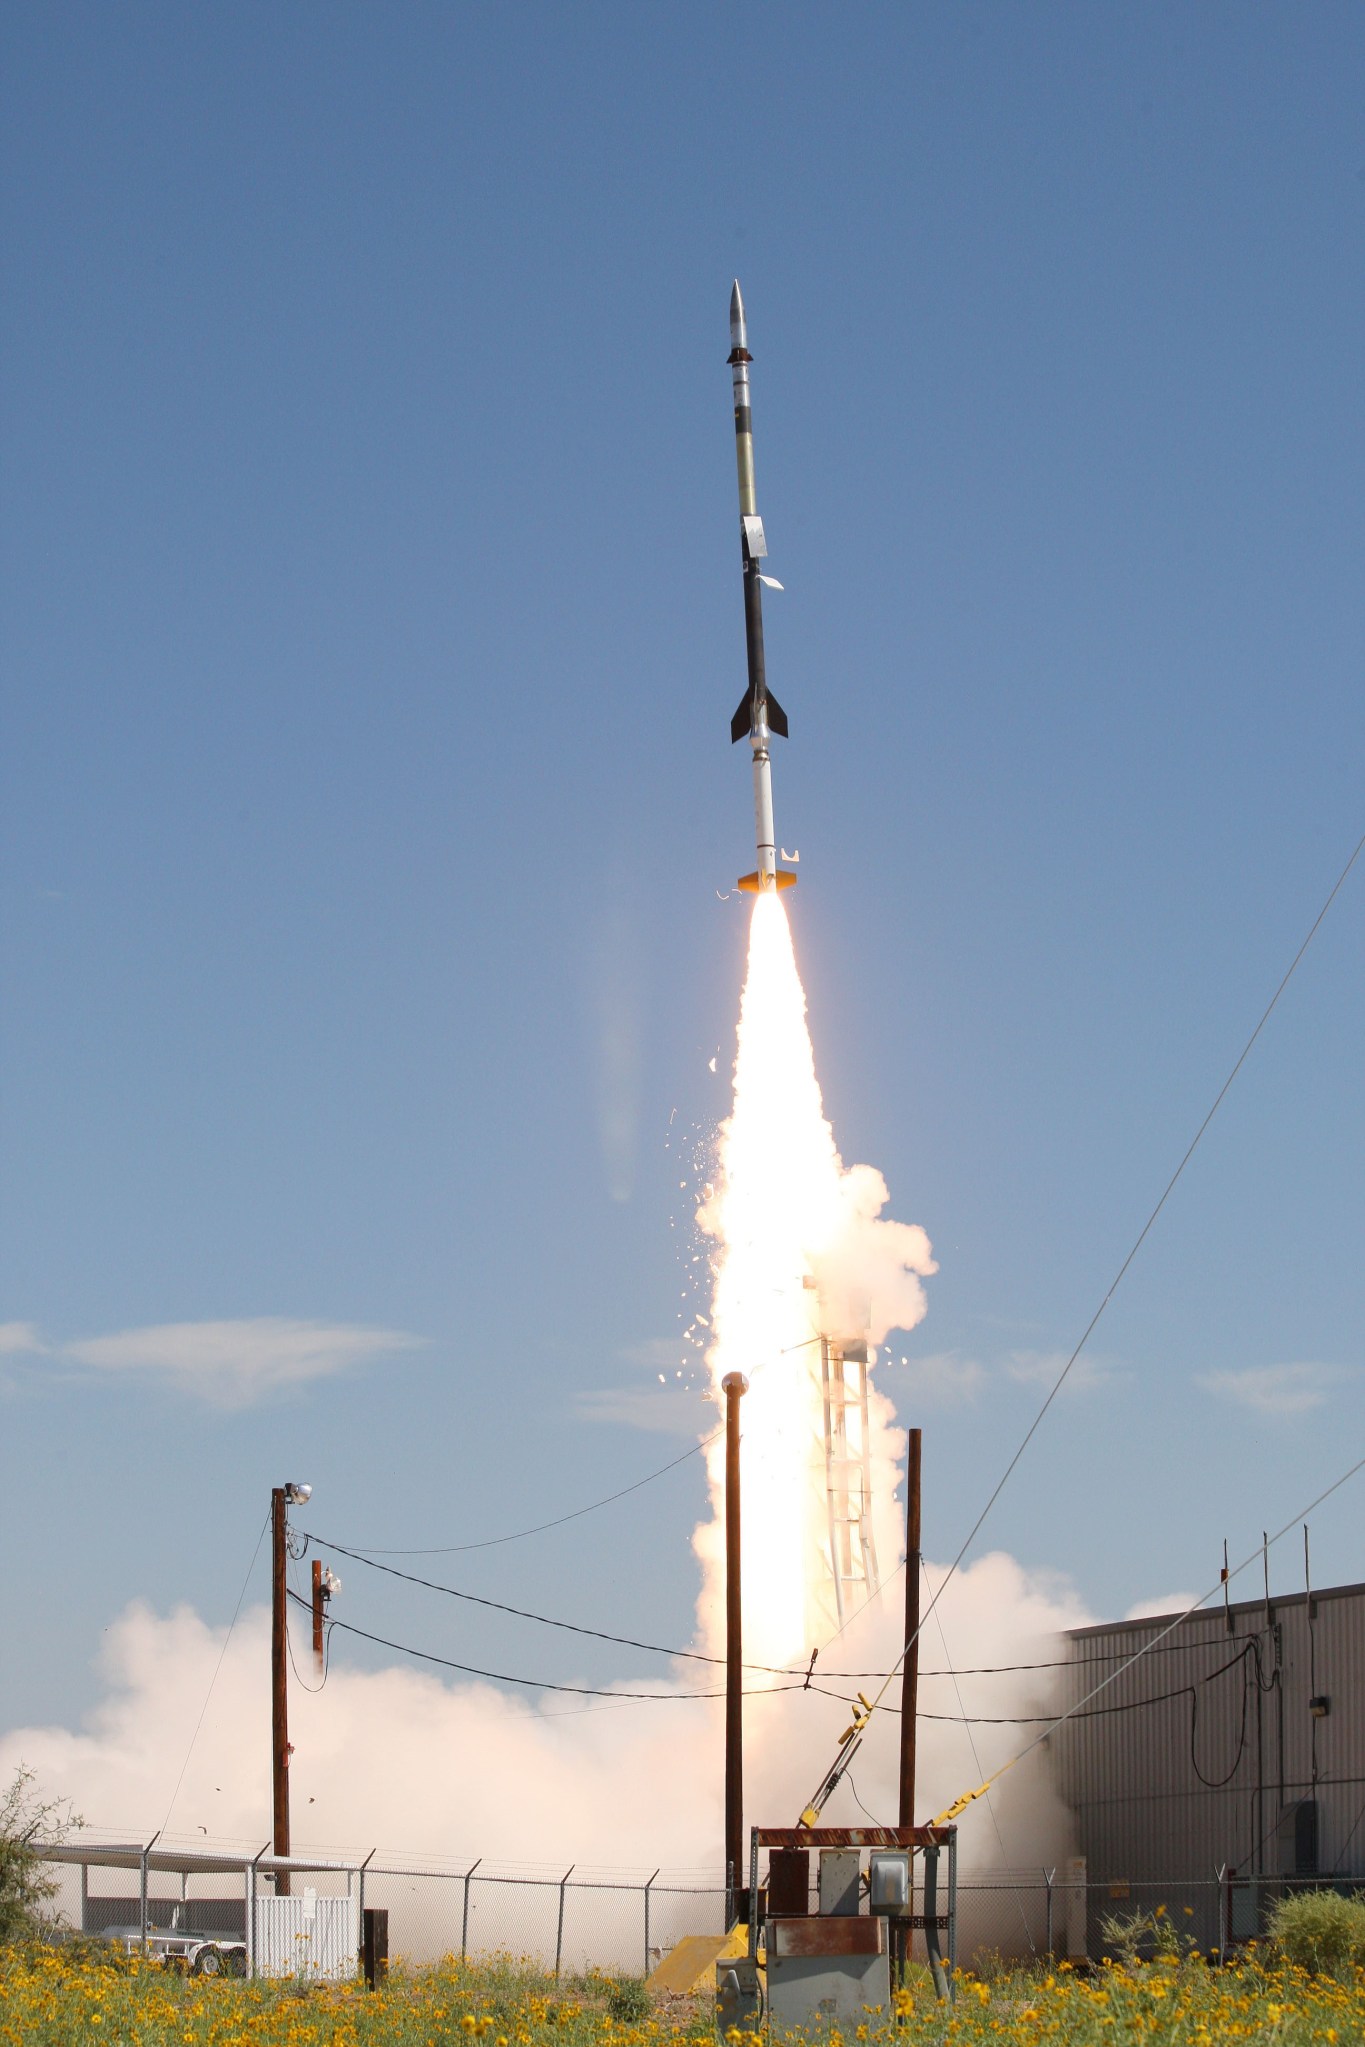 HERSCHEL sounding rocket launch; slender rocket taking flight against a blue-sky background